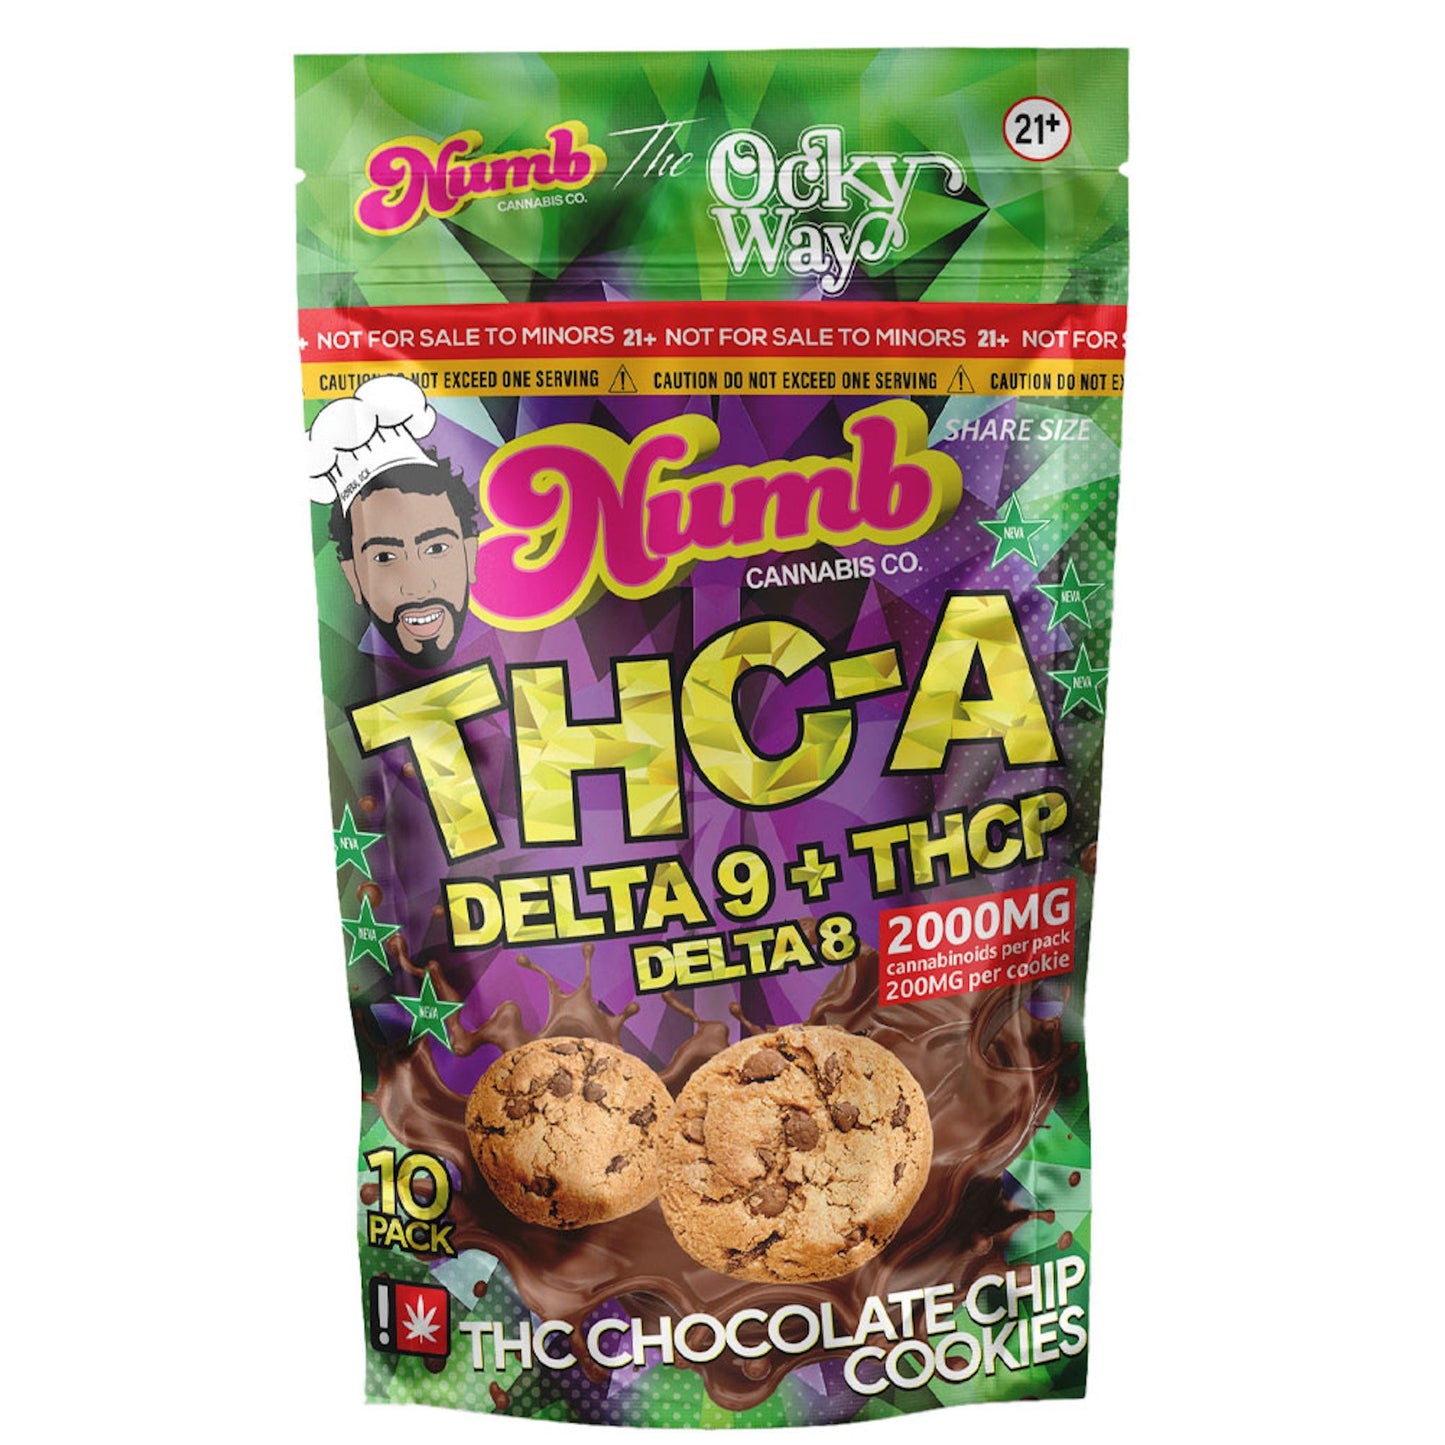 Numb THC-A Ocky Way Cookies - 2000mg